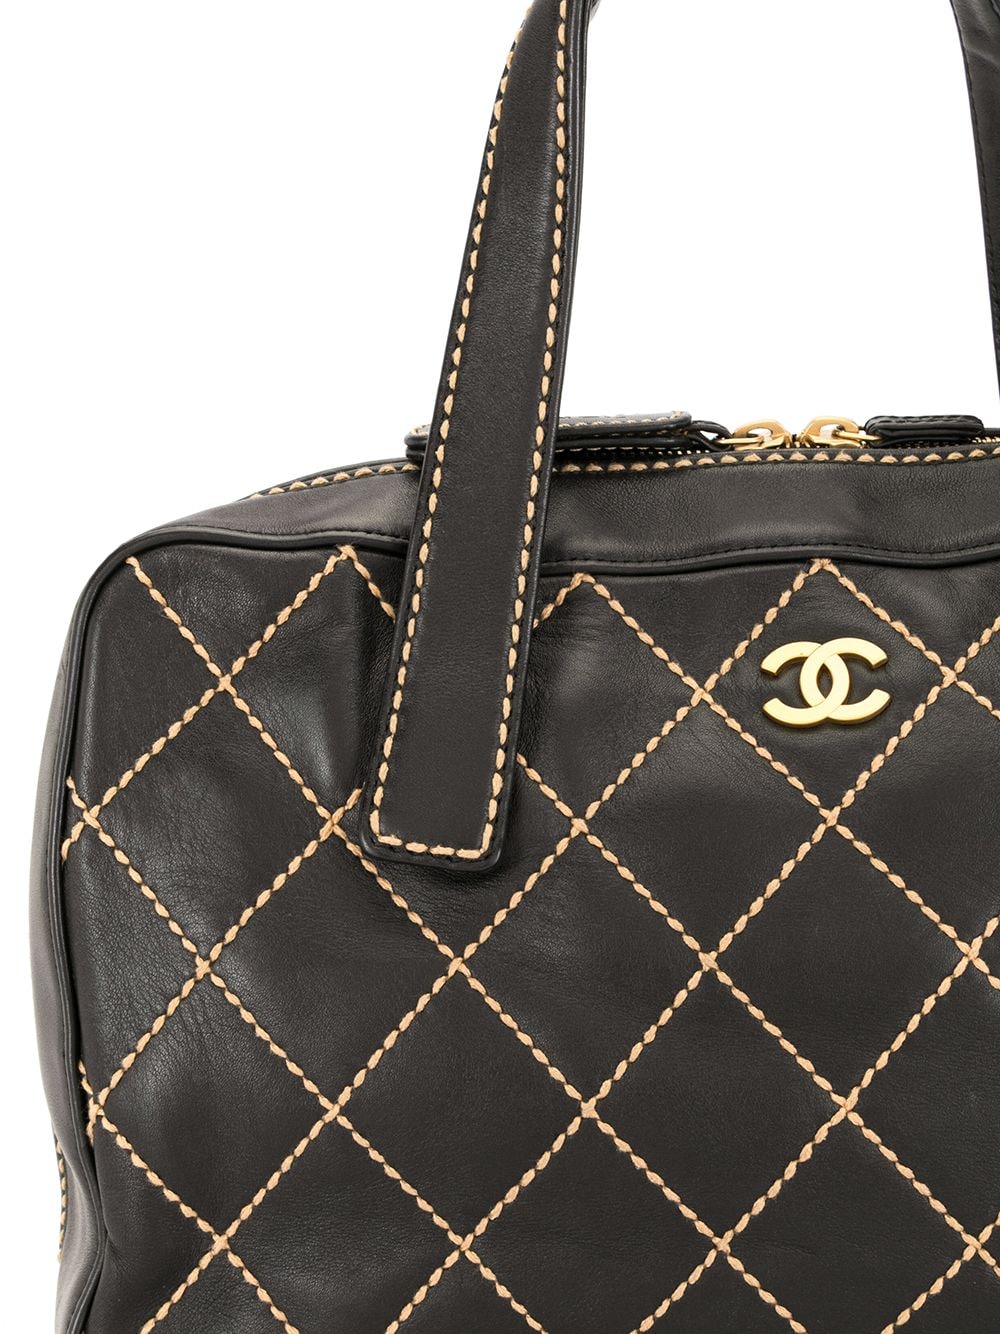 Chanel Beige Leather Wild Stitch Boston Bag Q6B04J43IB004